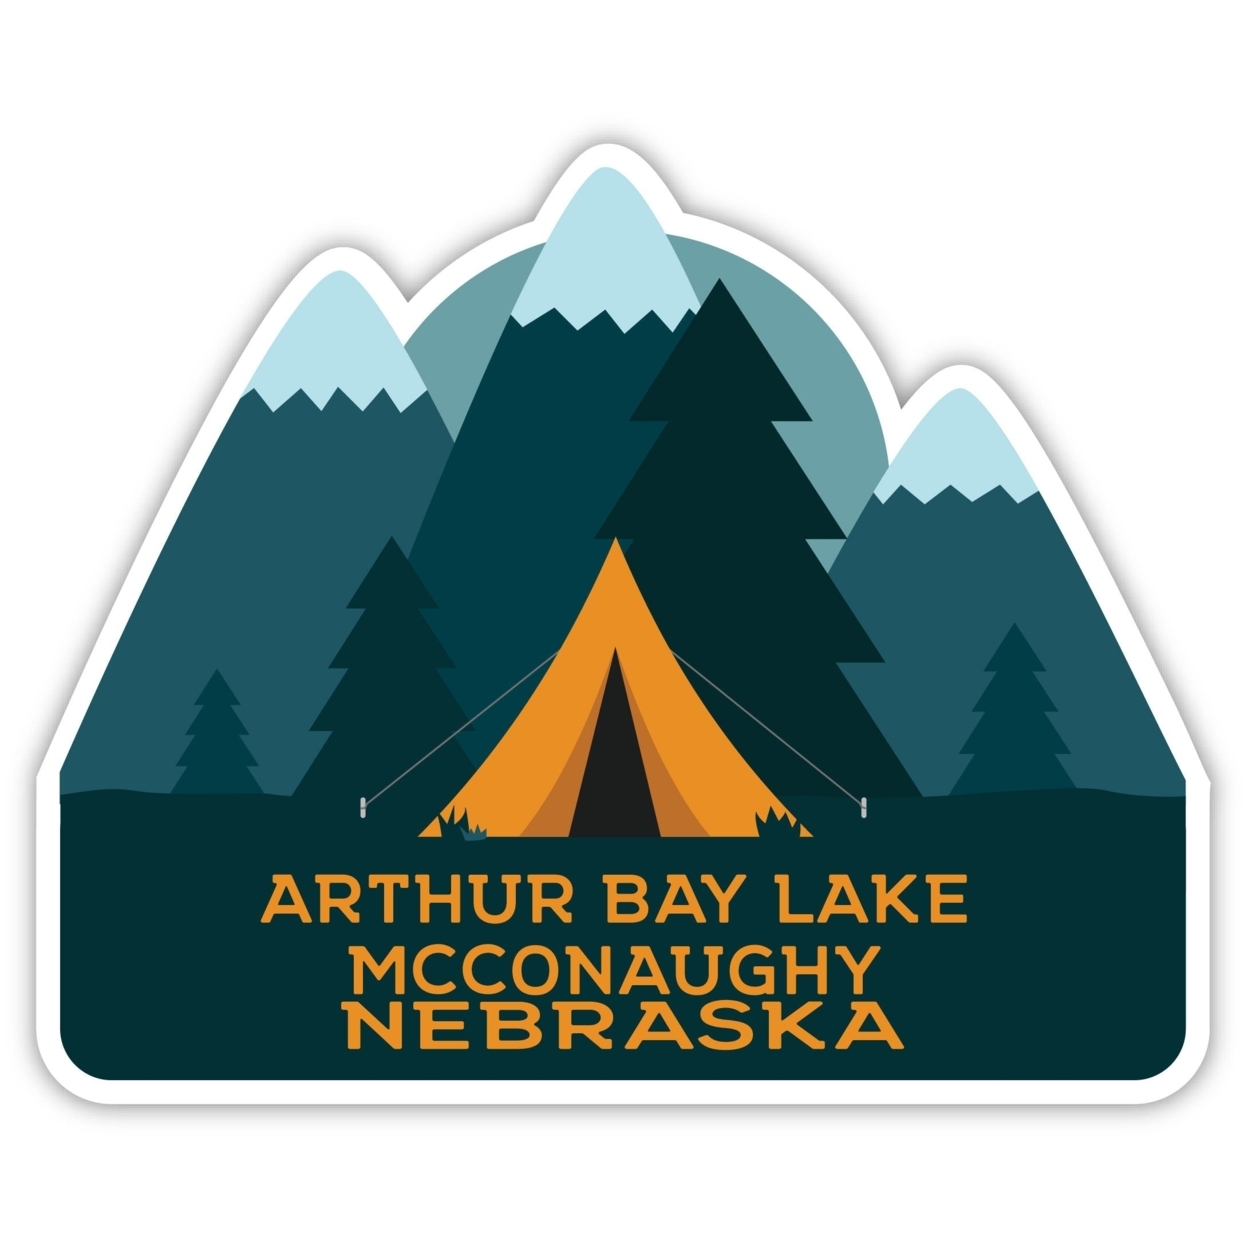 Arthur Bay Lake Mcconaughy Nebraska Souvenir Decorative Stickers (Choose Theme And Size) - Single Unit, 8-Inch, Tent